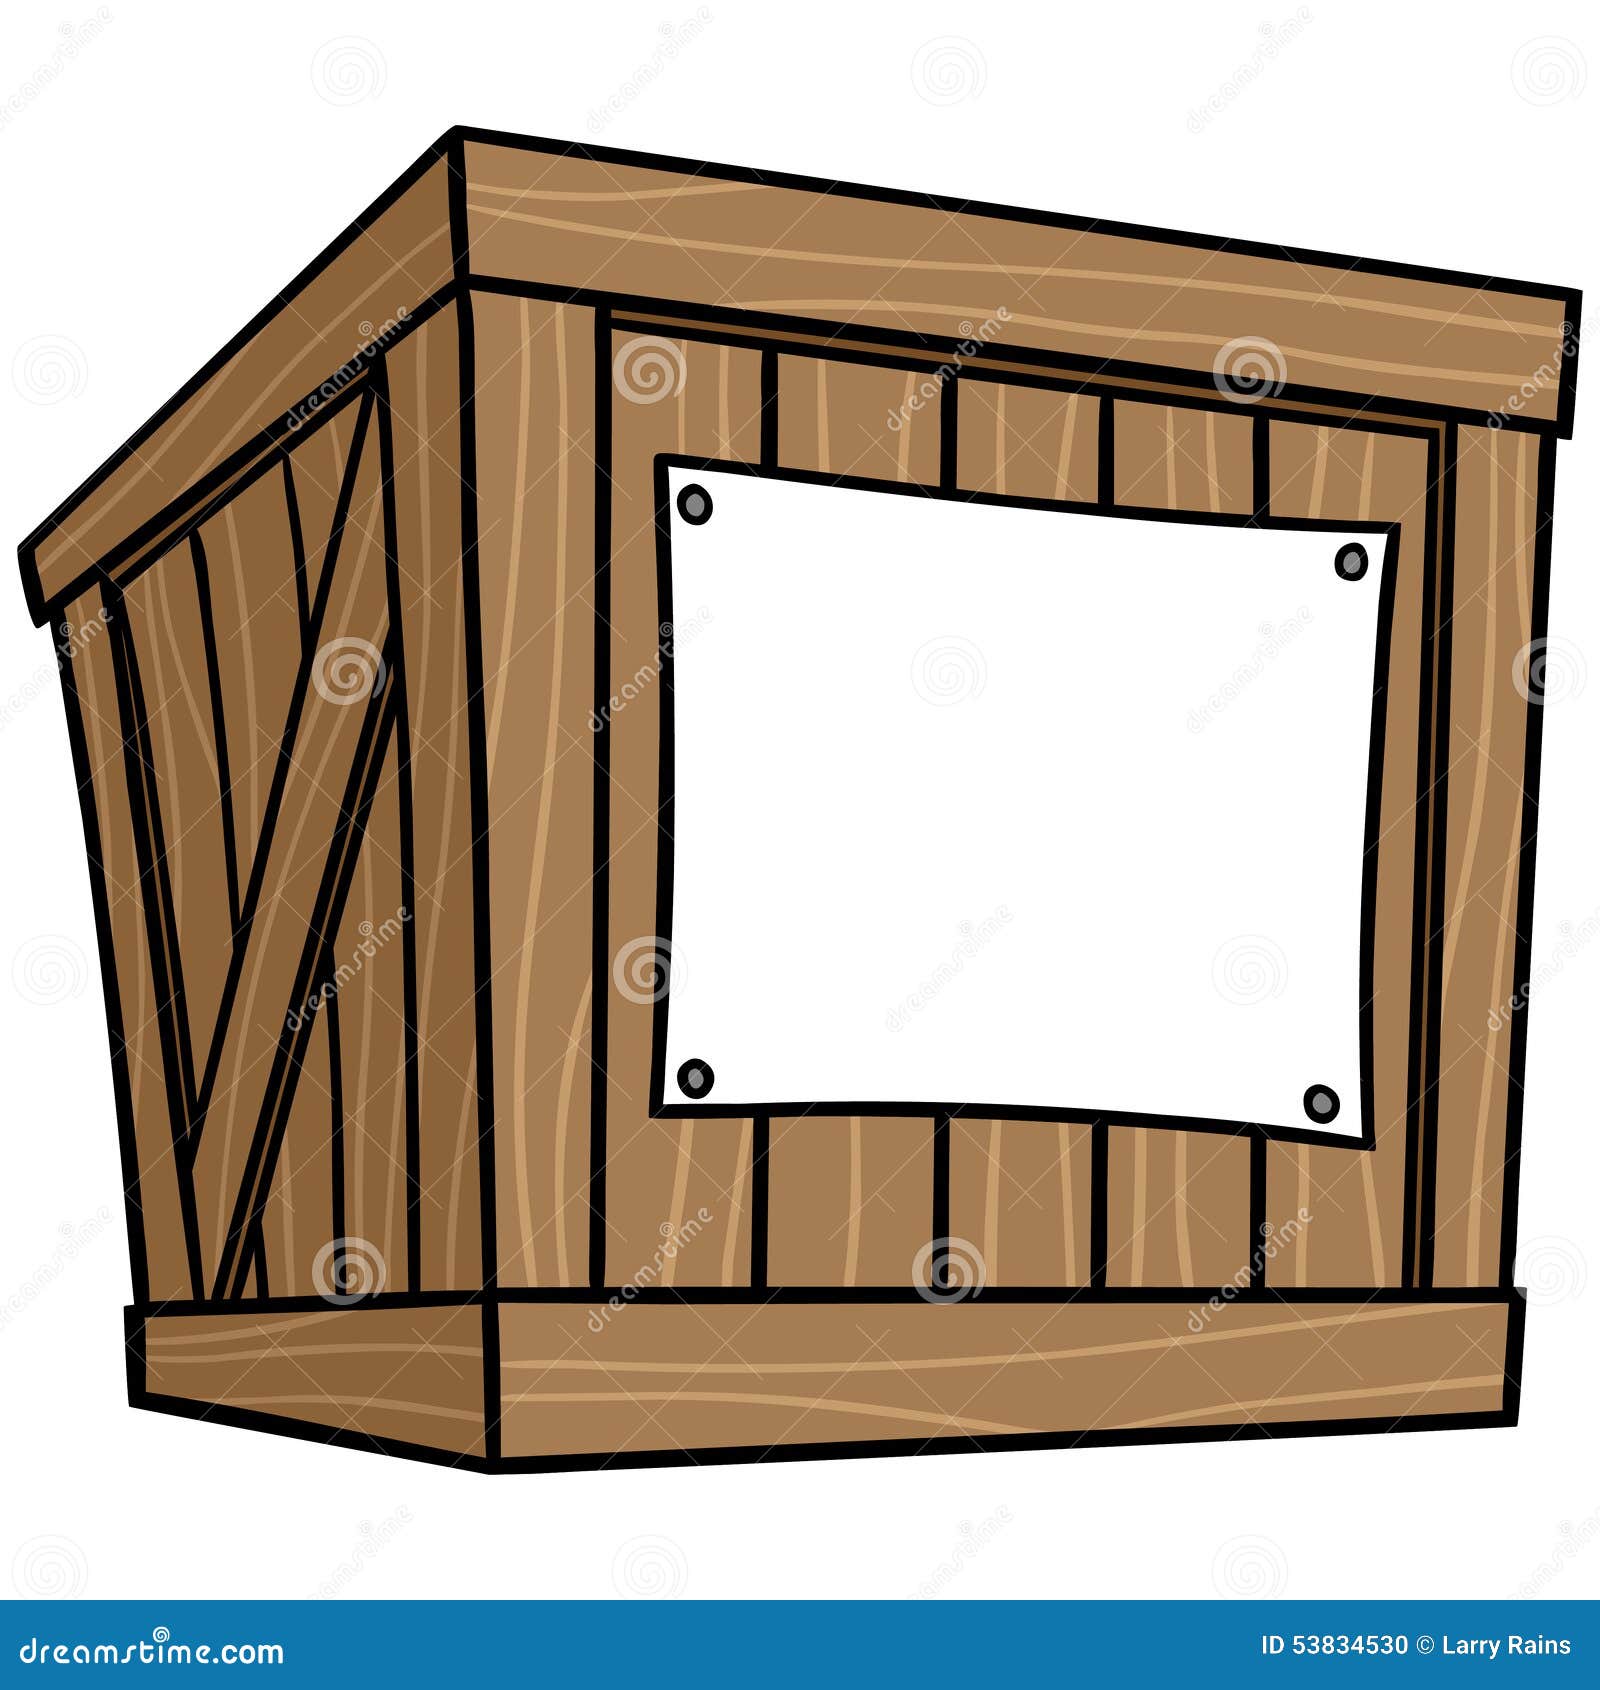 Crate Cartoon Stock Vector - Image: 53834530